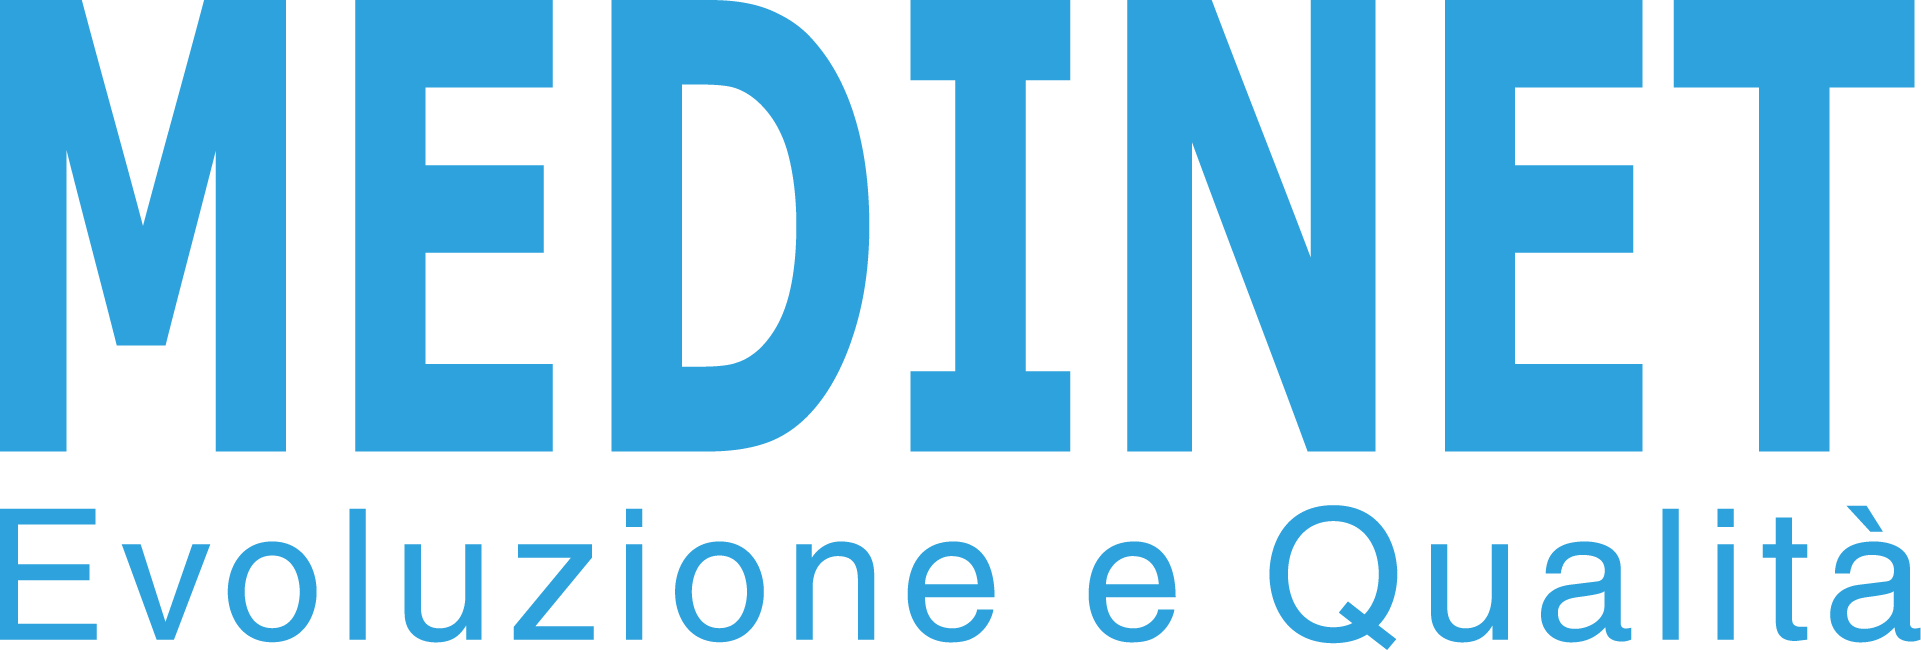 MEDINET logo azzurro 02